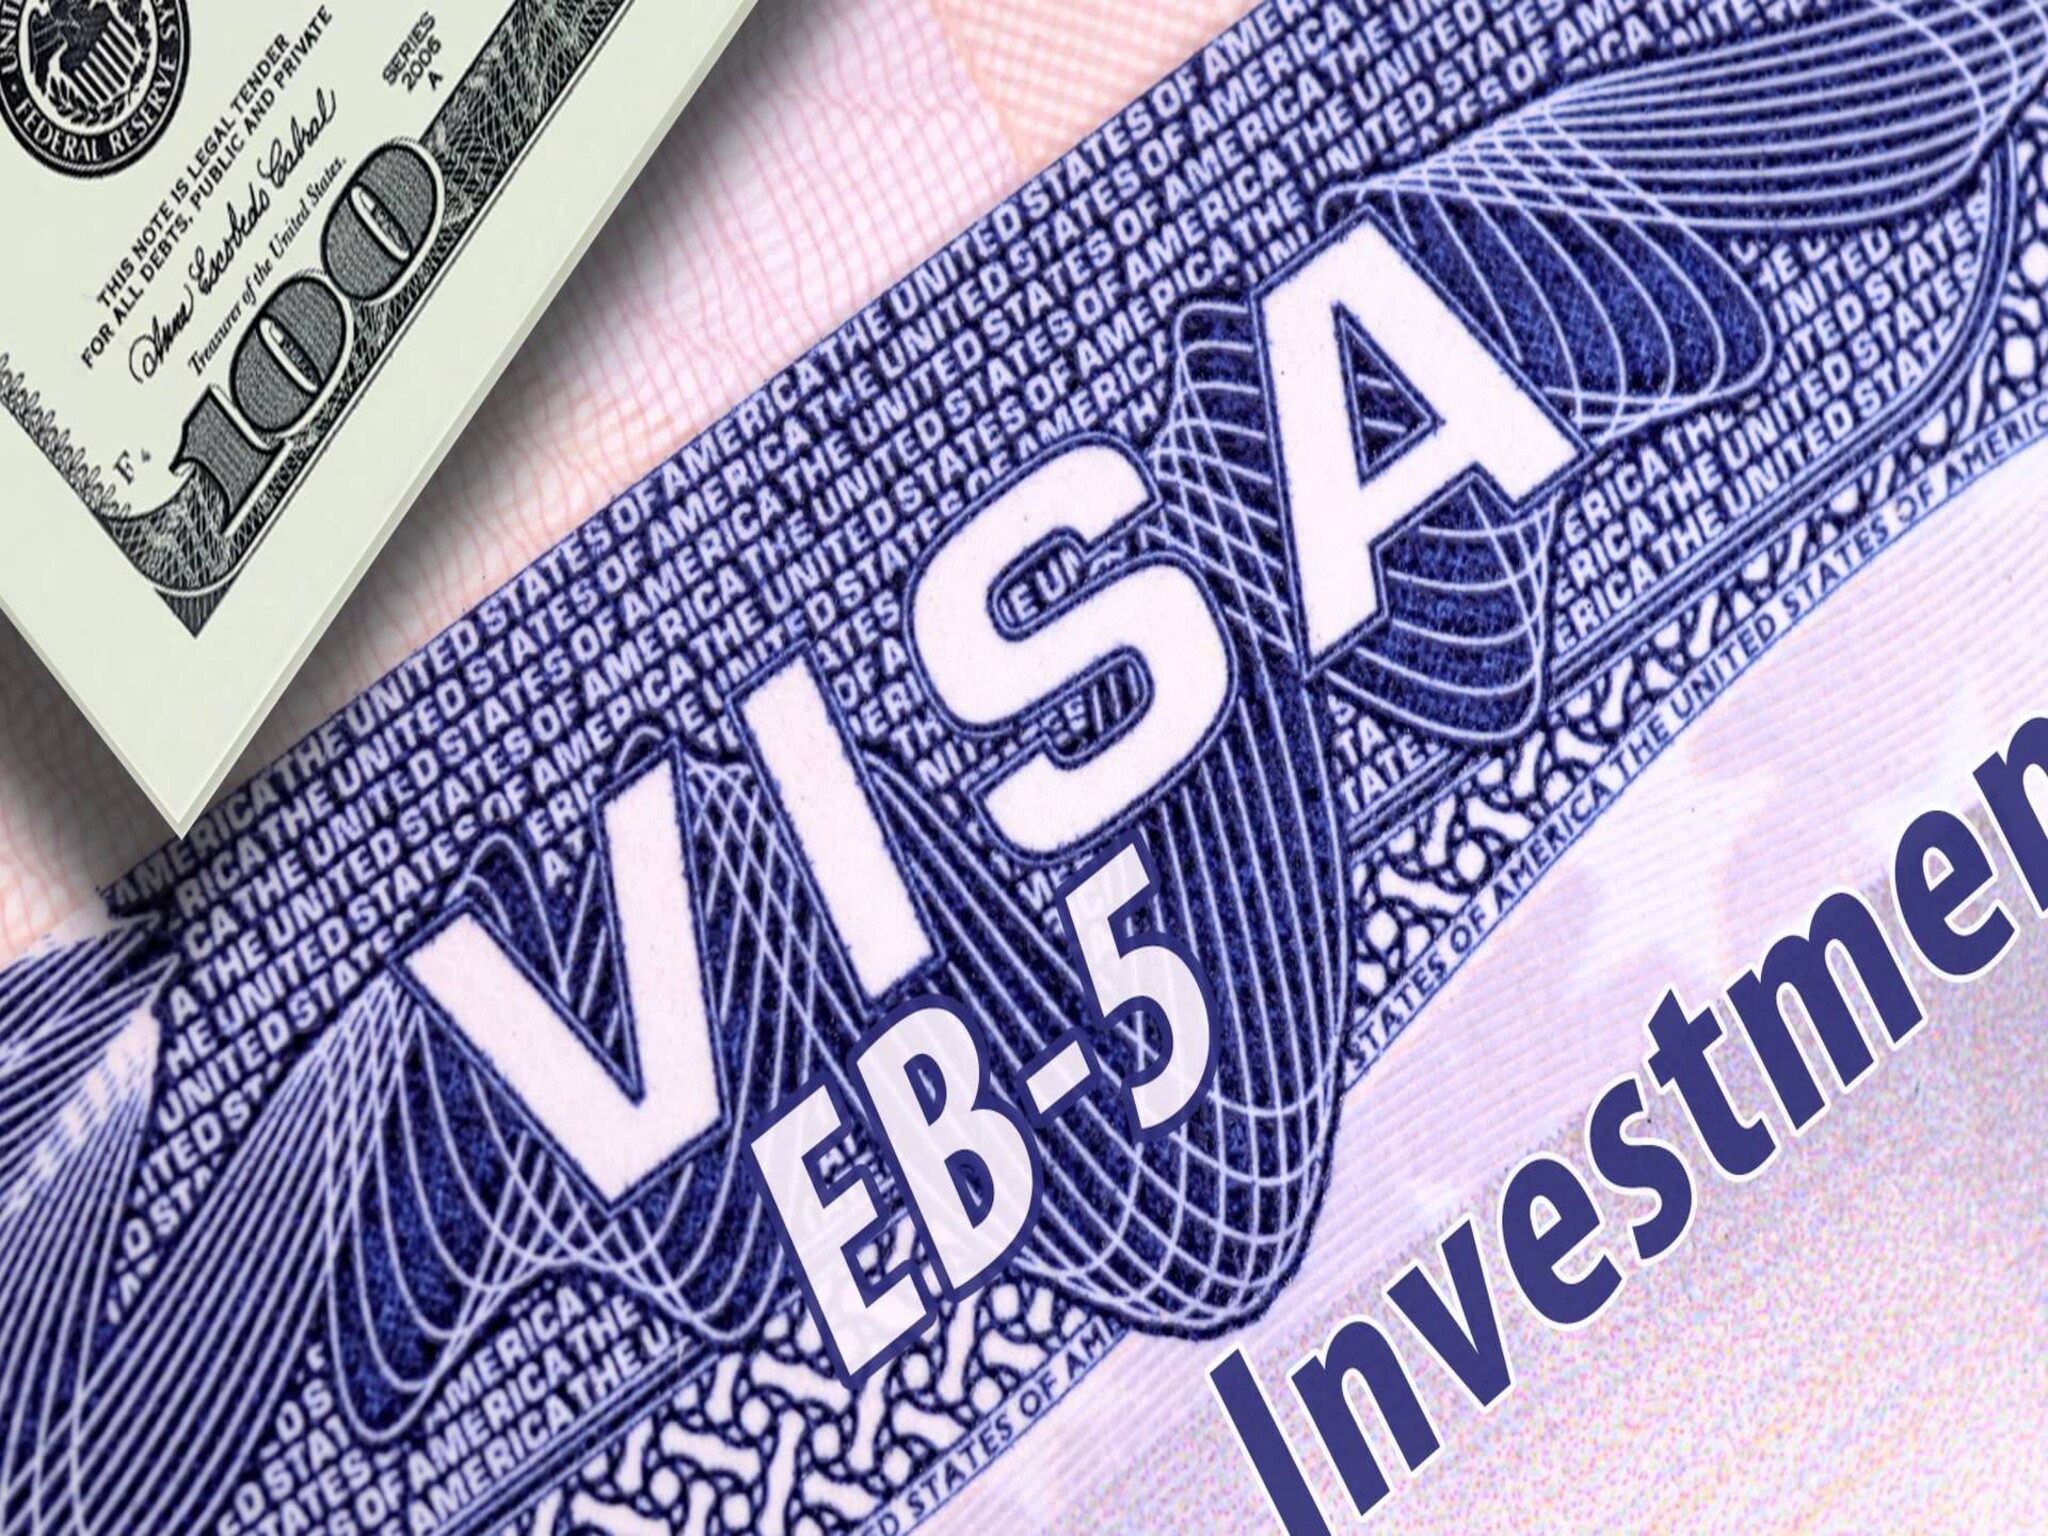 The US EB-5 Golden Visa Program provides comprehensive details and features